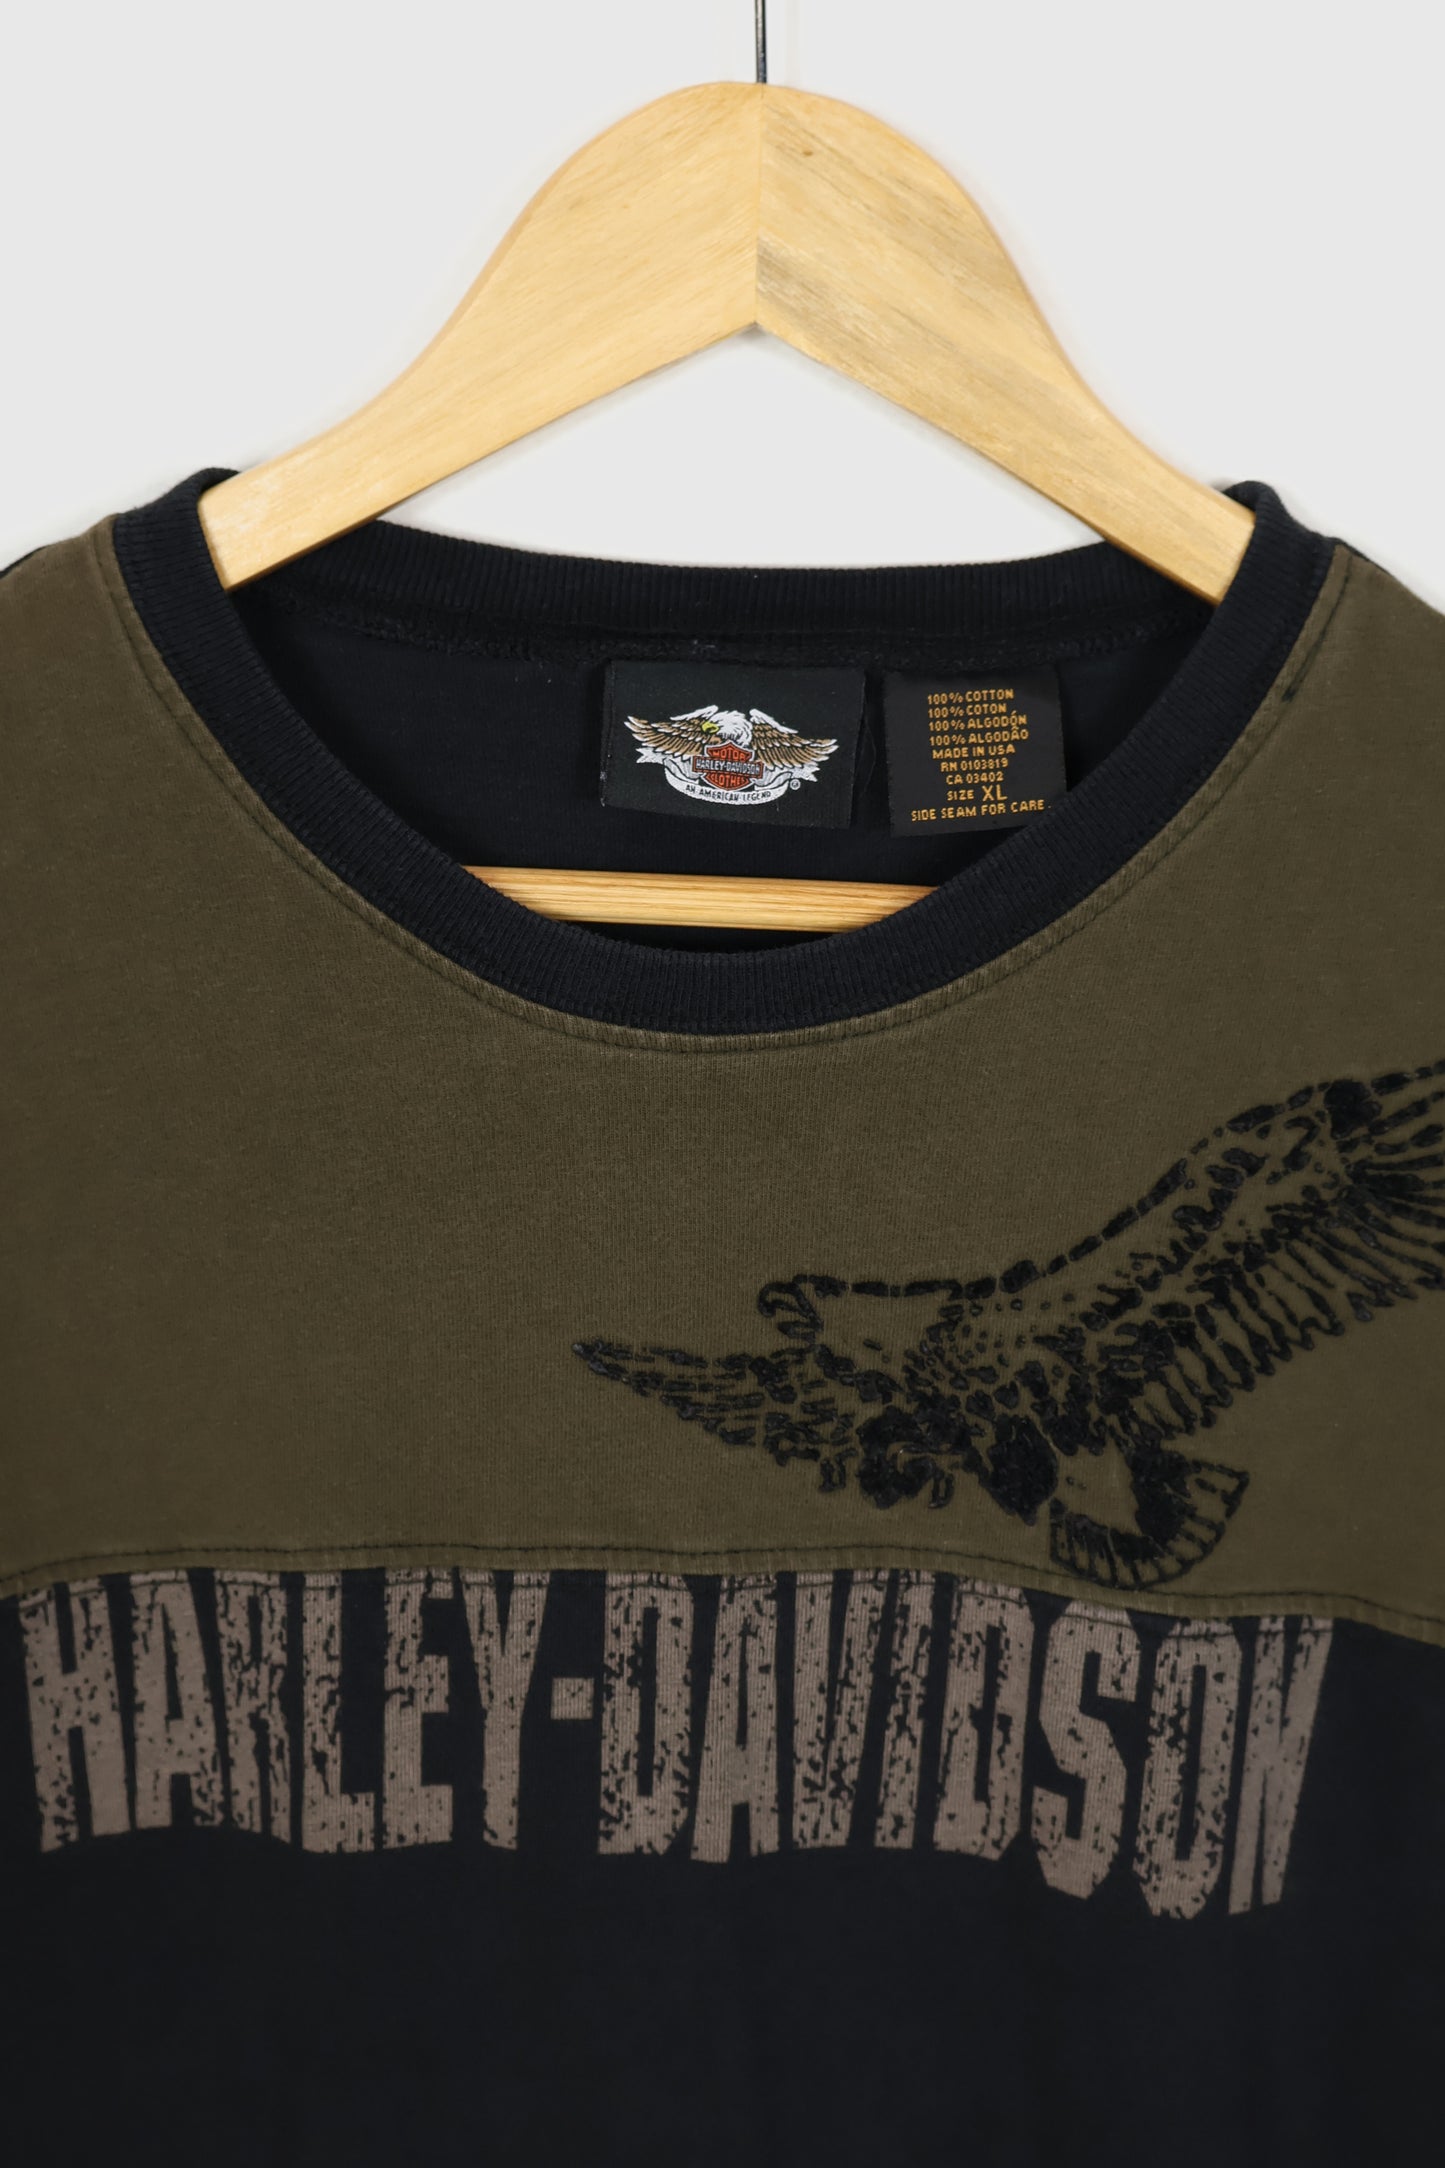 Harley Davidson Long Sleeve Tee